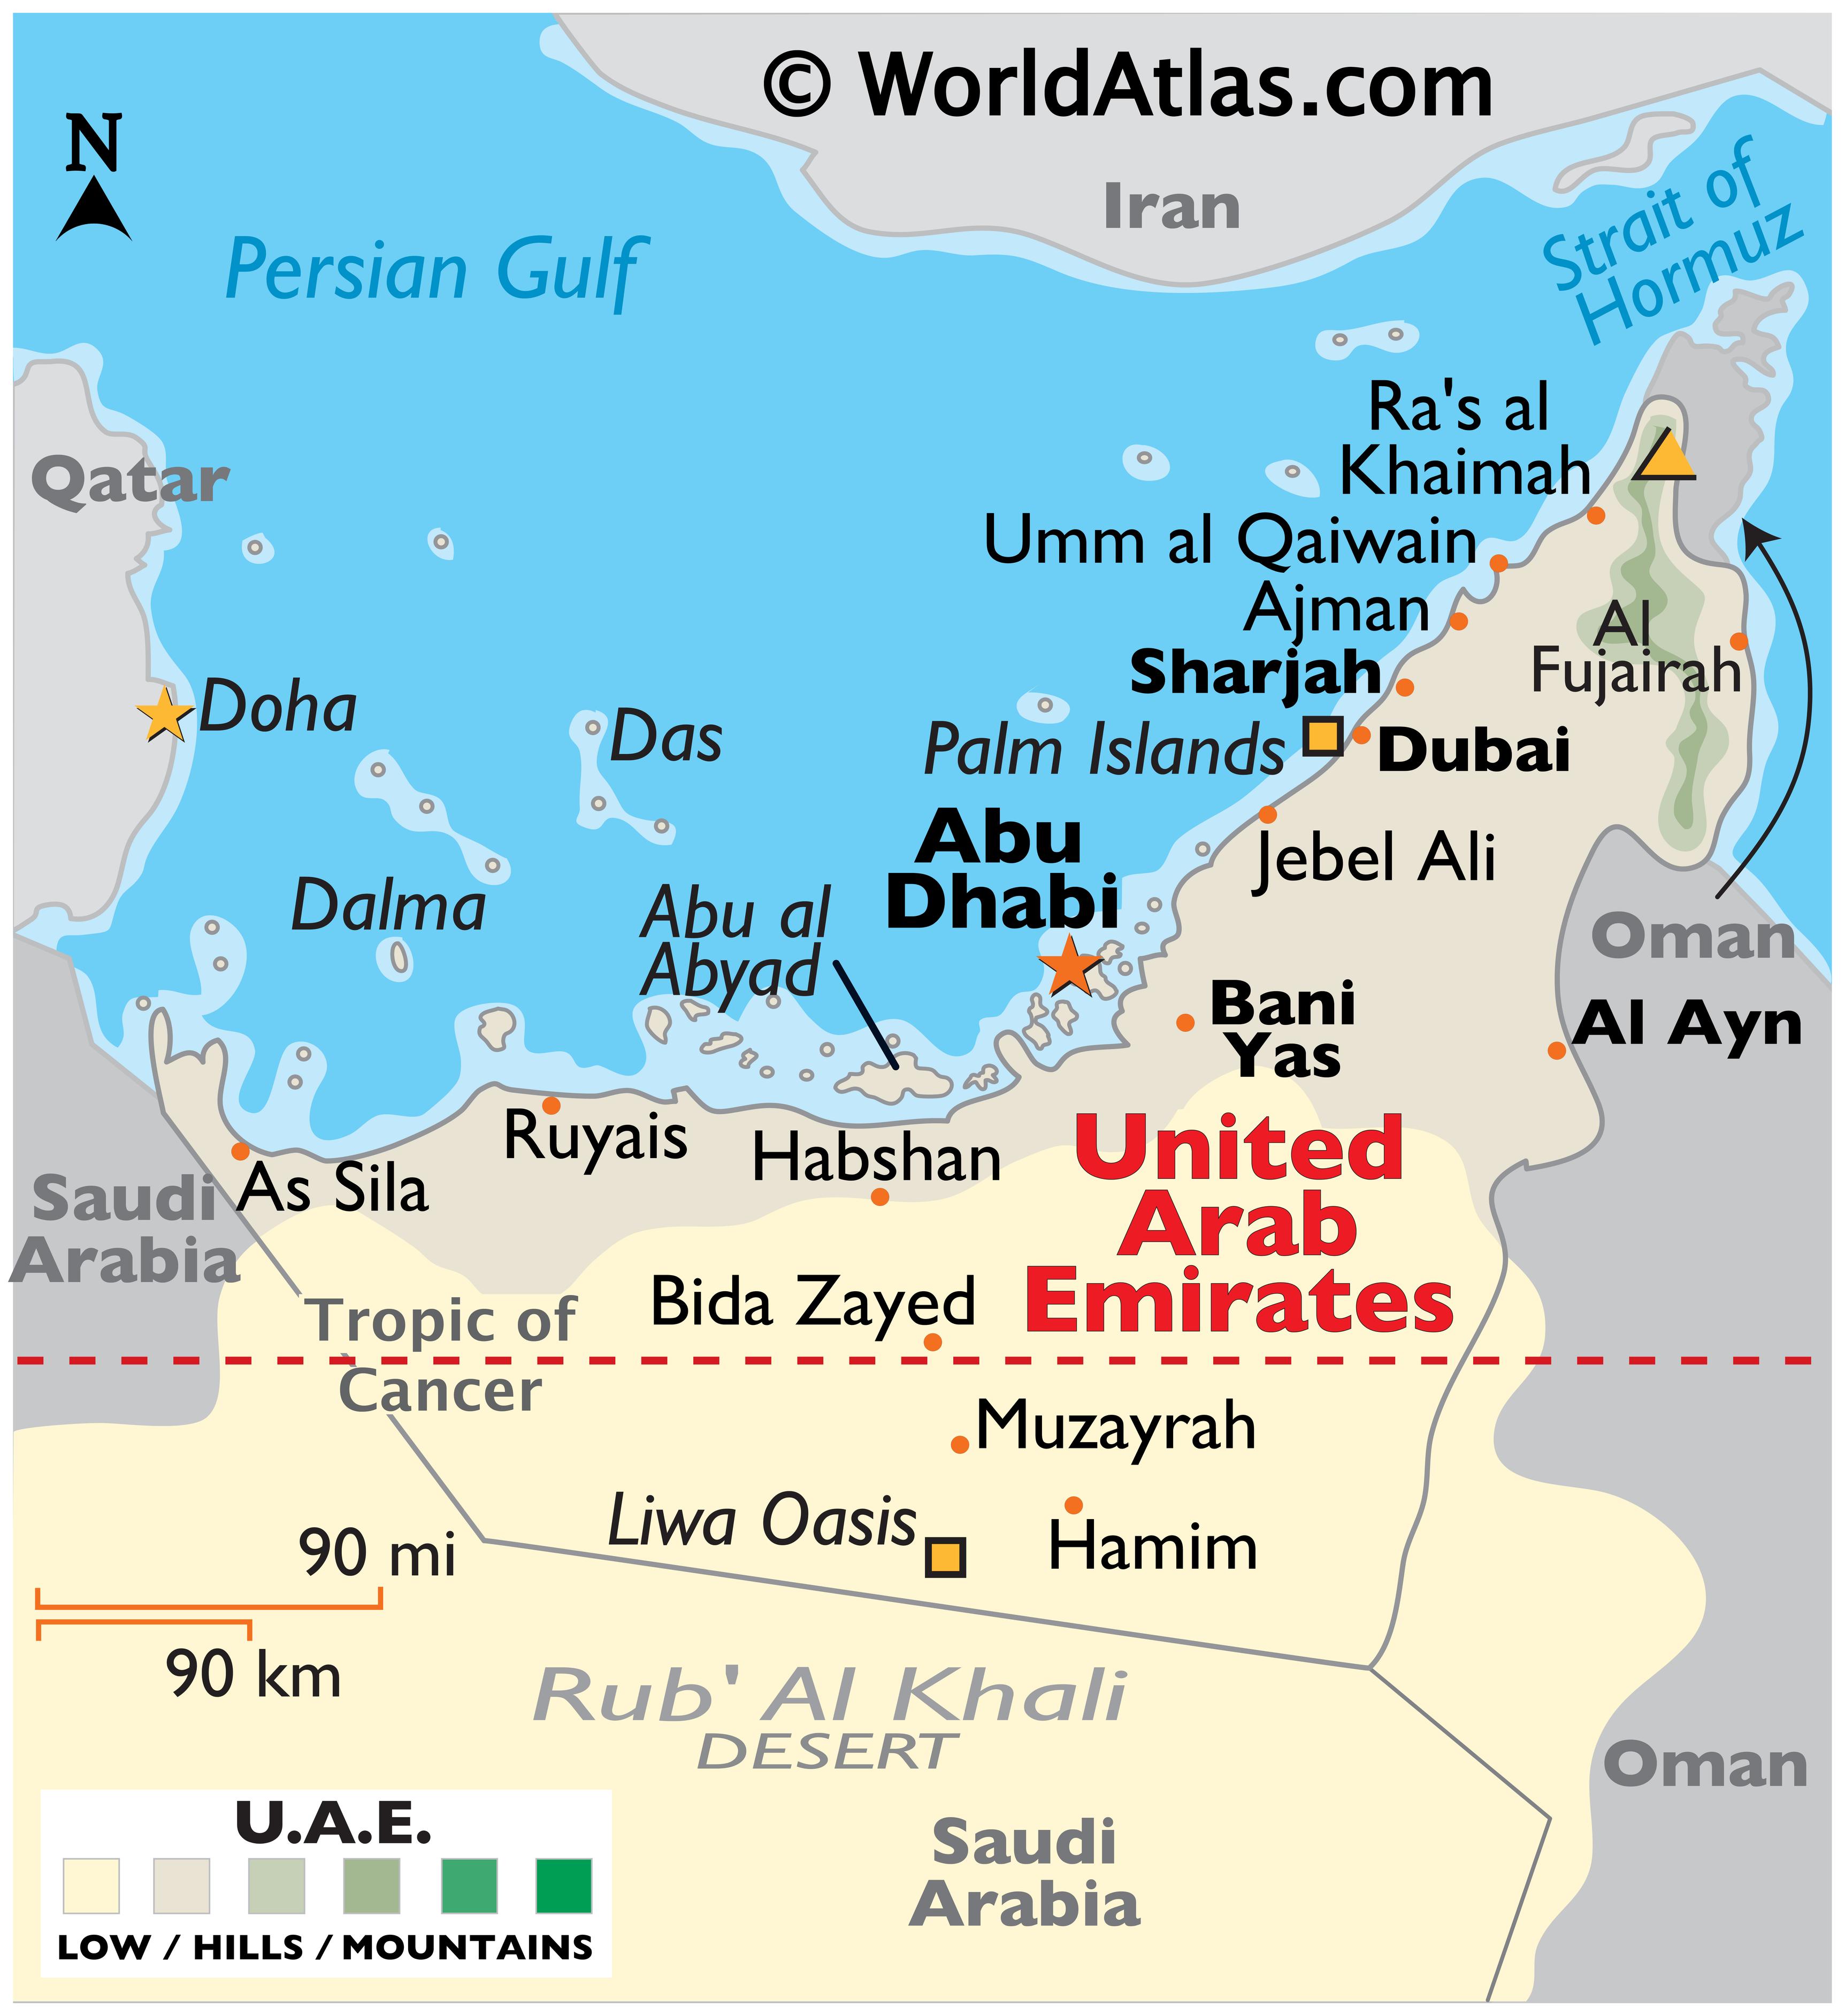 United Arab Emirates Land Statistics - World Atlas